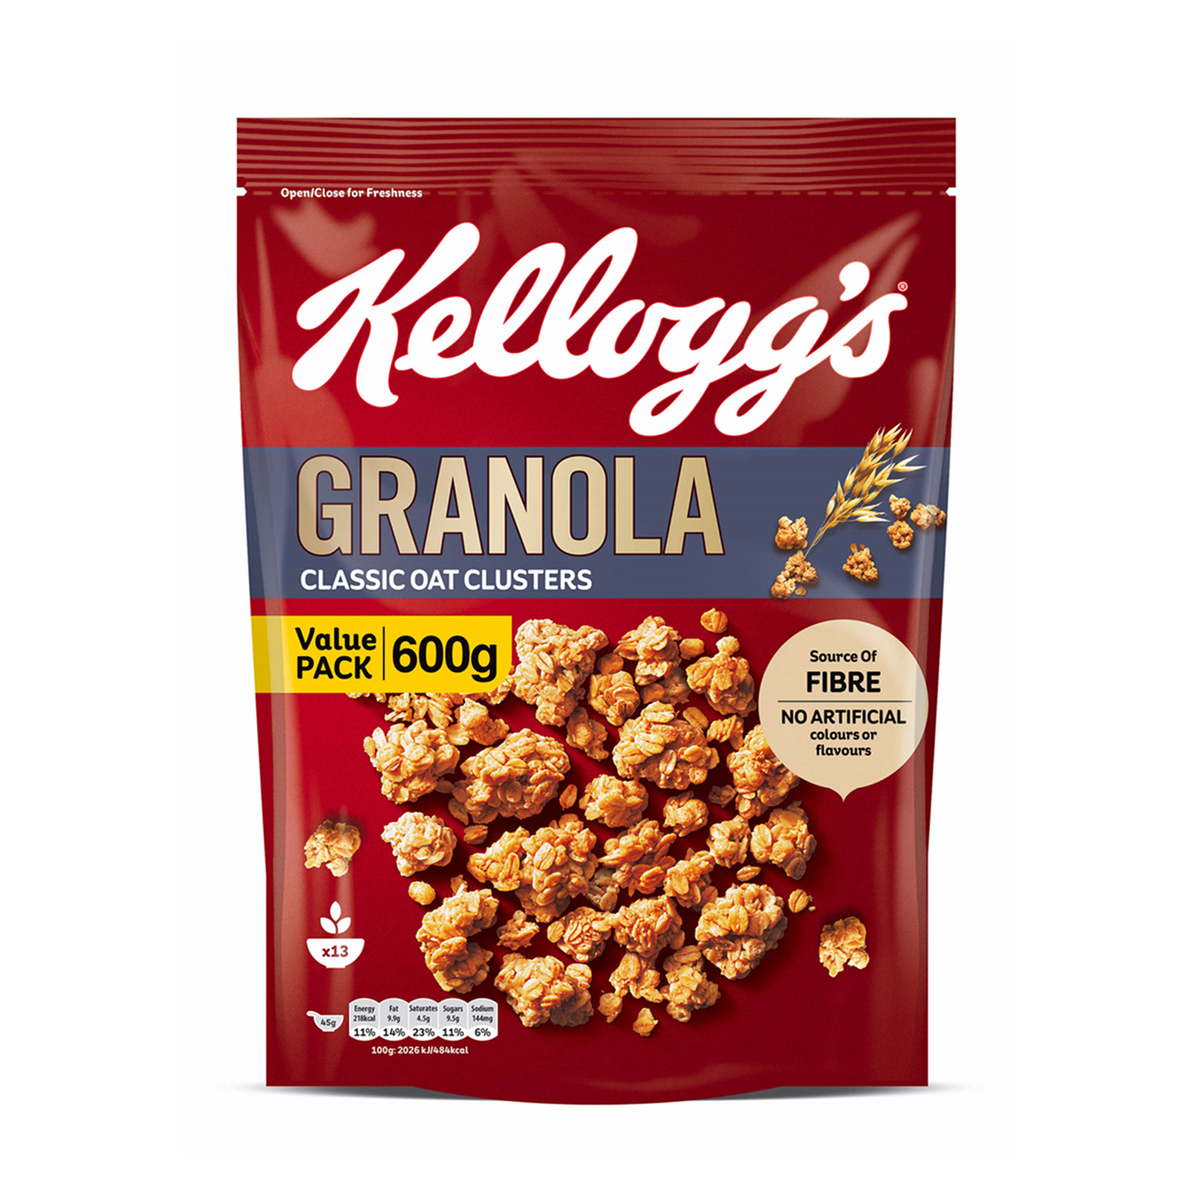 Kellogg's Granola Classic Oat Clusters 600g